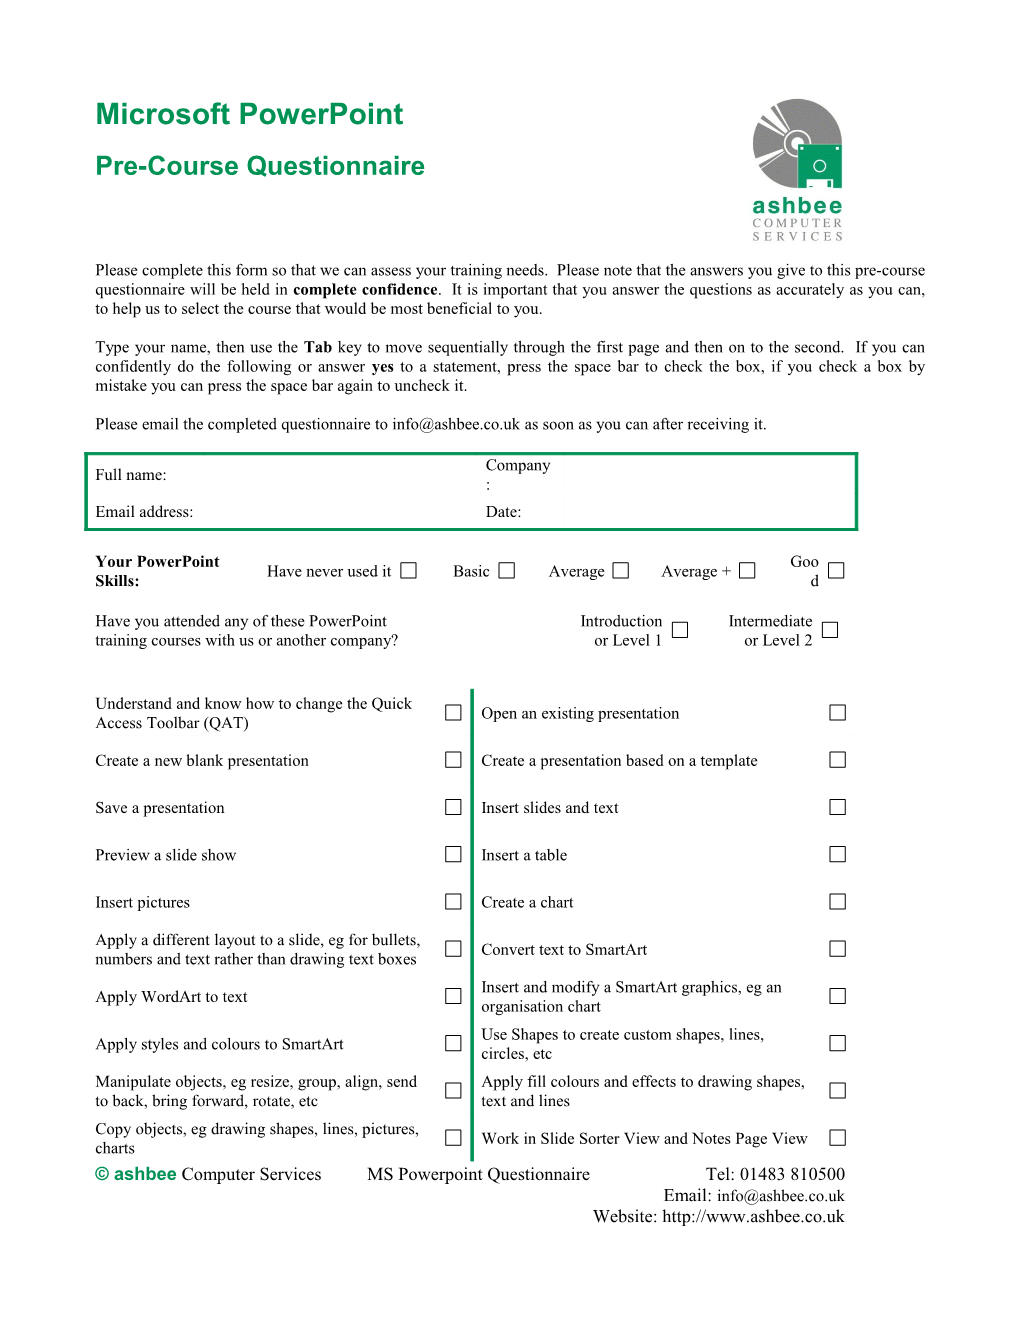 Microsoft Word 2003 Pre-Course Questionnaire